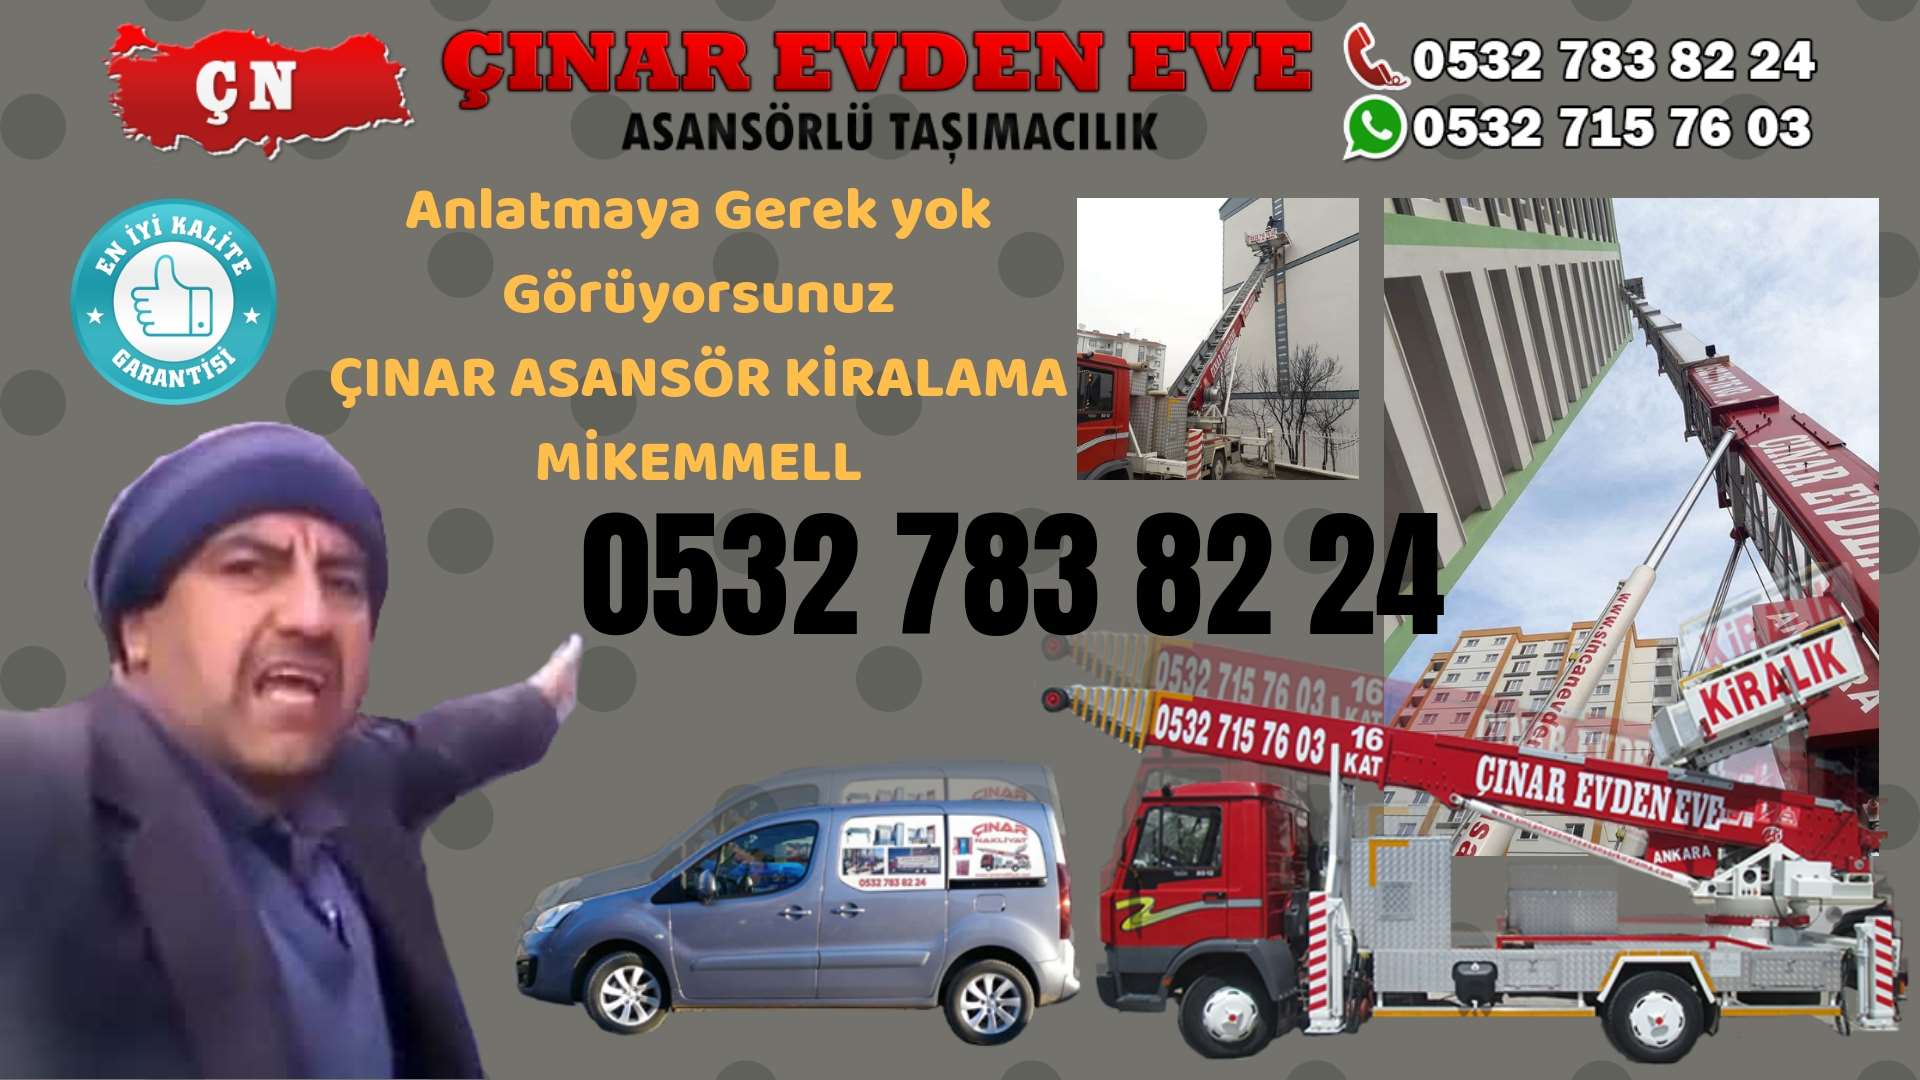 Ankara Ayaş Ankara asansör kiralama hizmeti sizlere başta kalite ve maddi acıdan tasarruf 0532 715 76 03